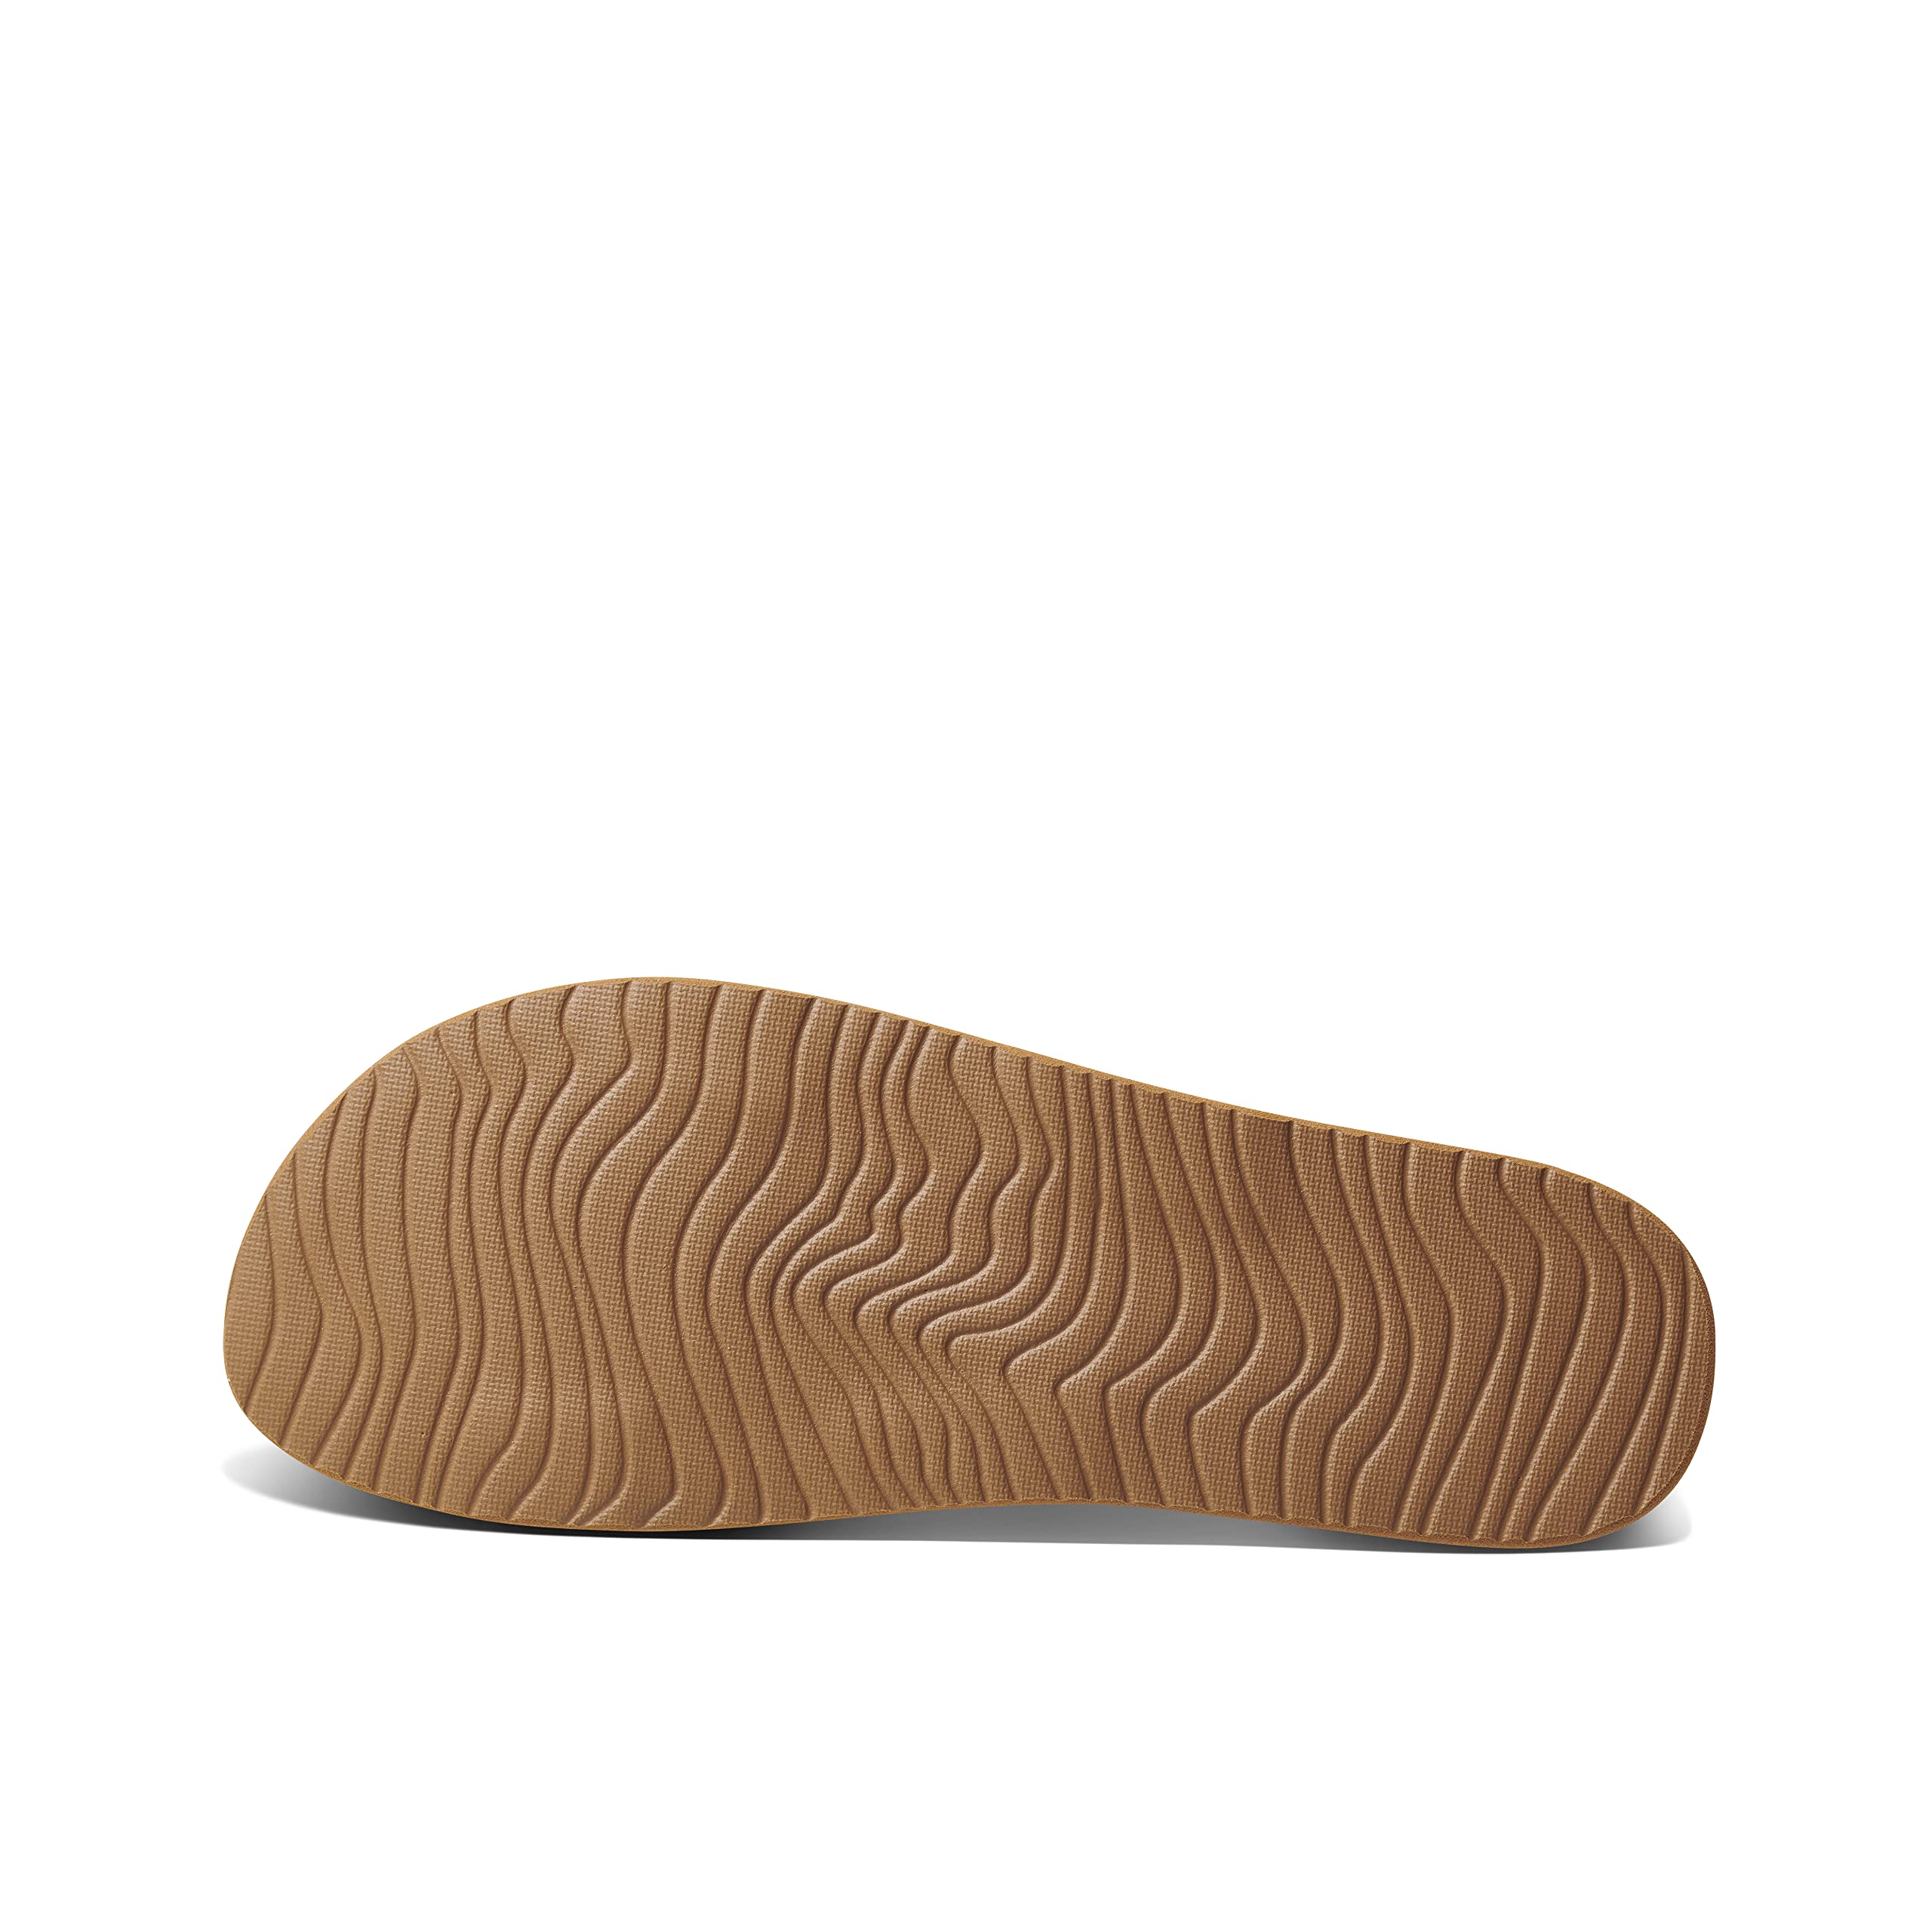 Reef Women's Cushion Vista Slide Sandal